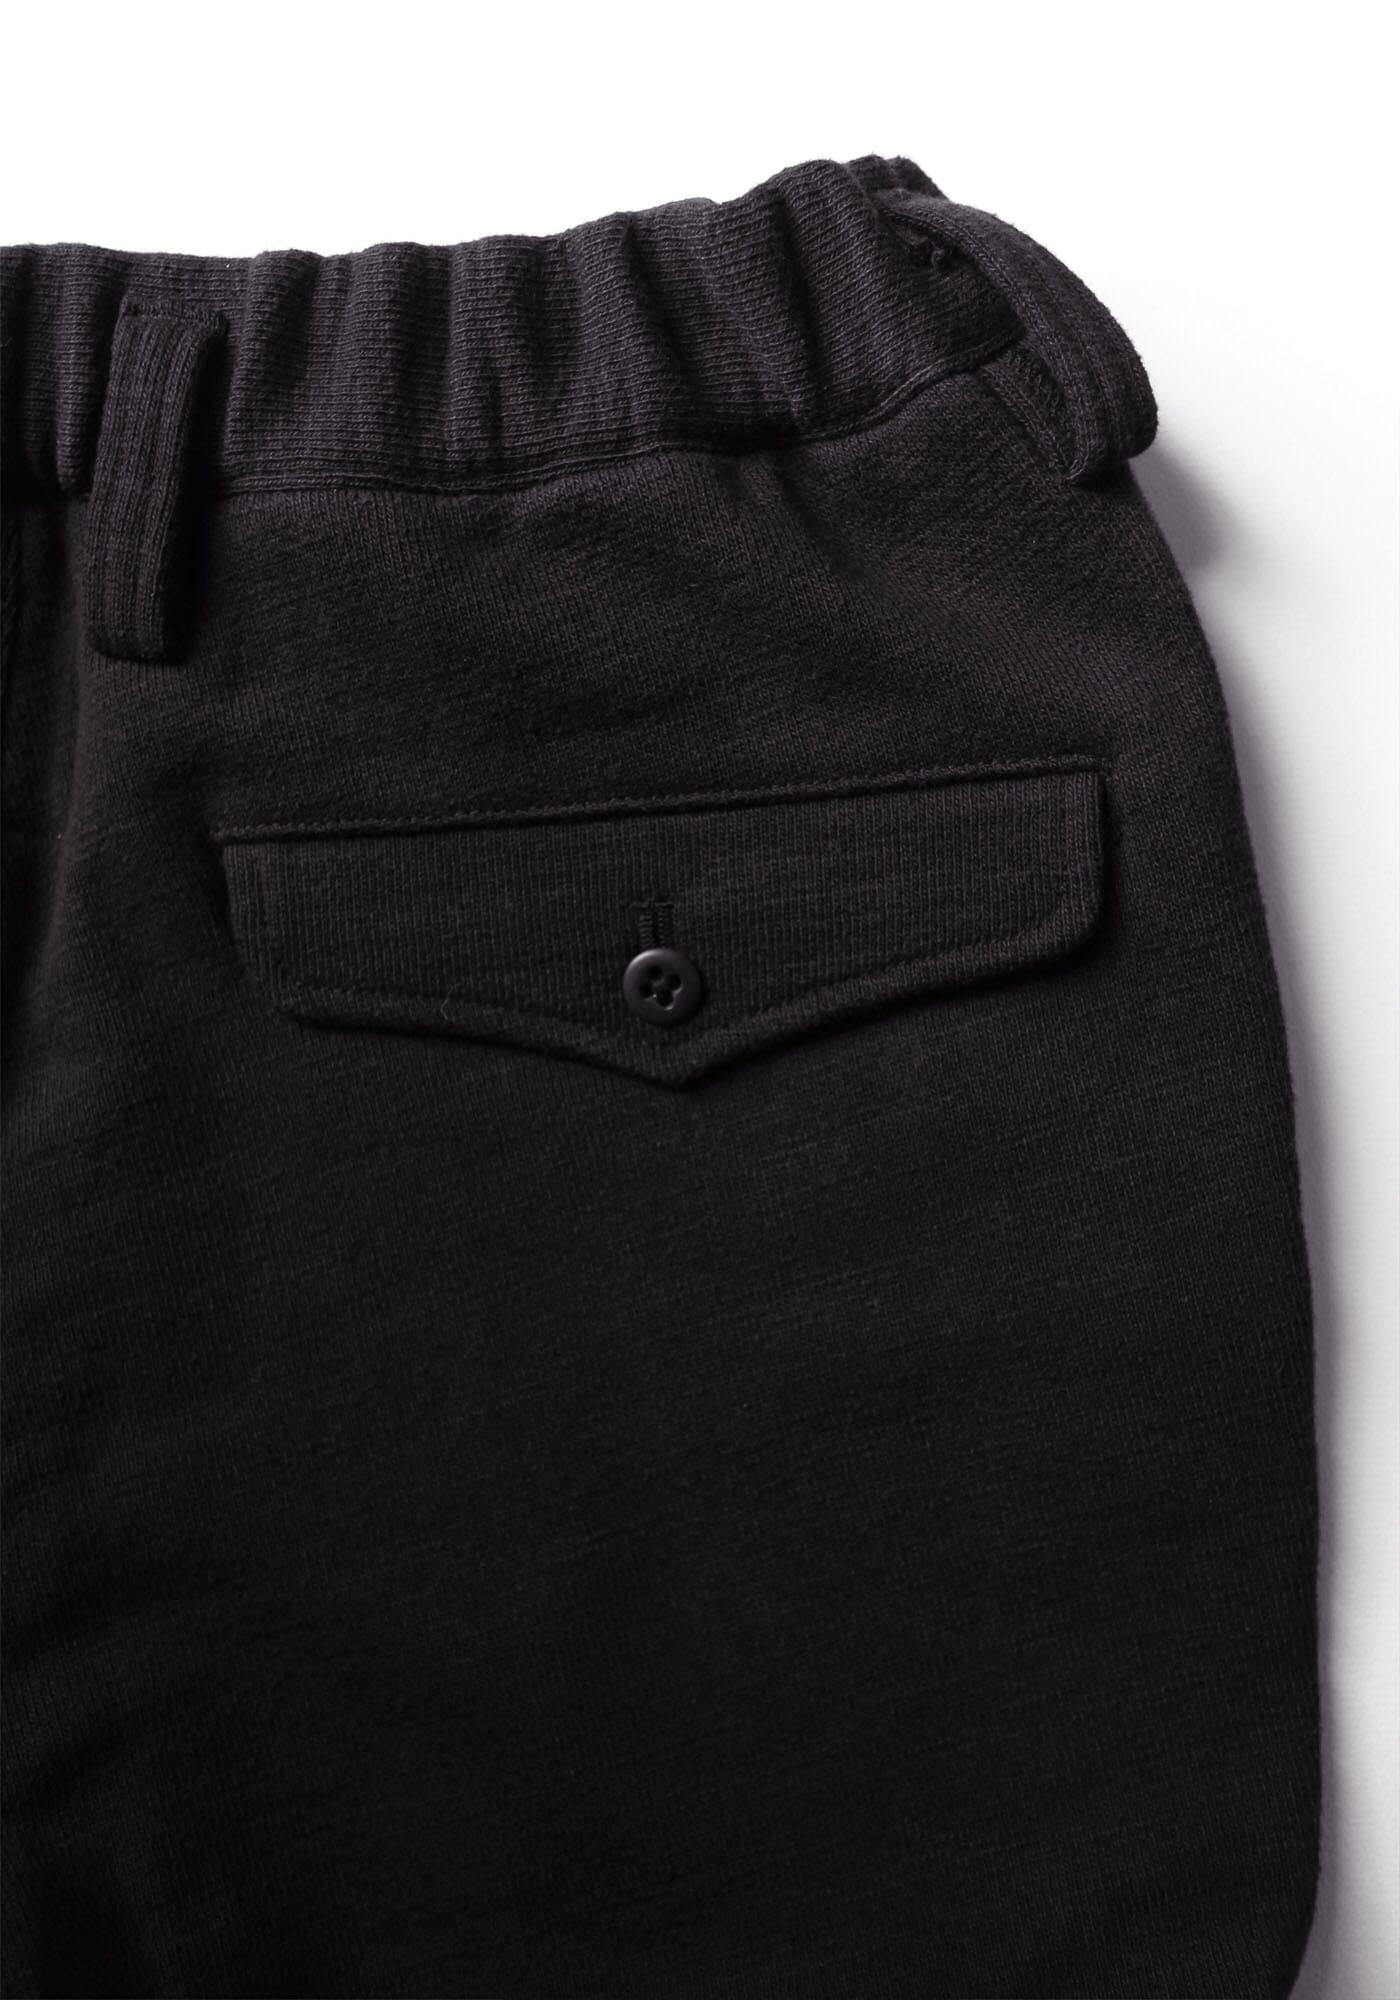 Jackman - GG Sweat Trousers in Black - City Workshop Men's Supply Co.